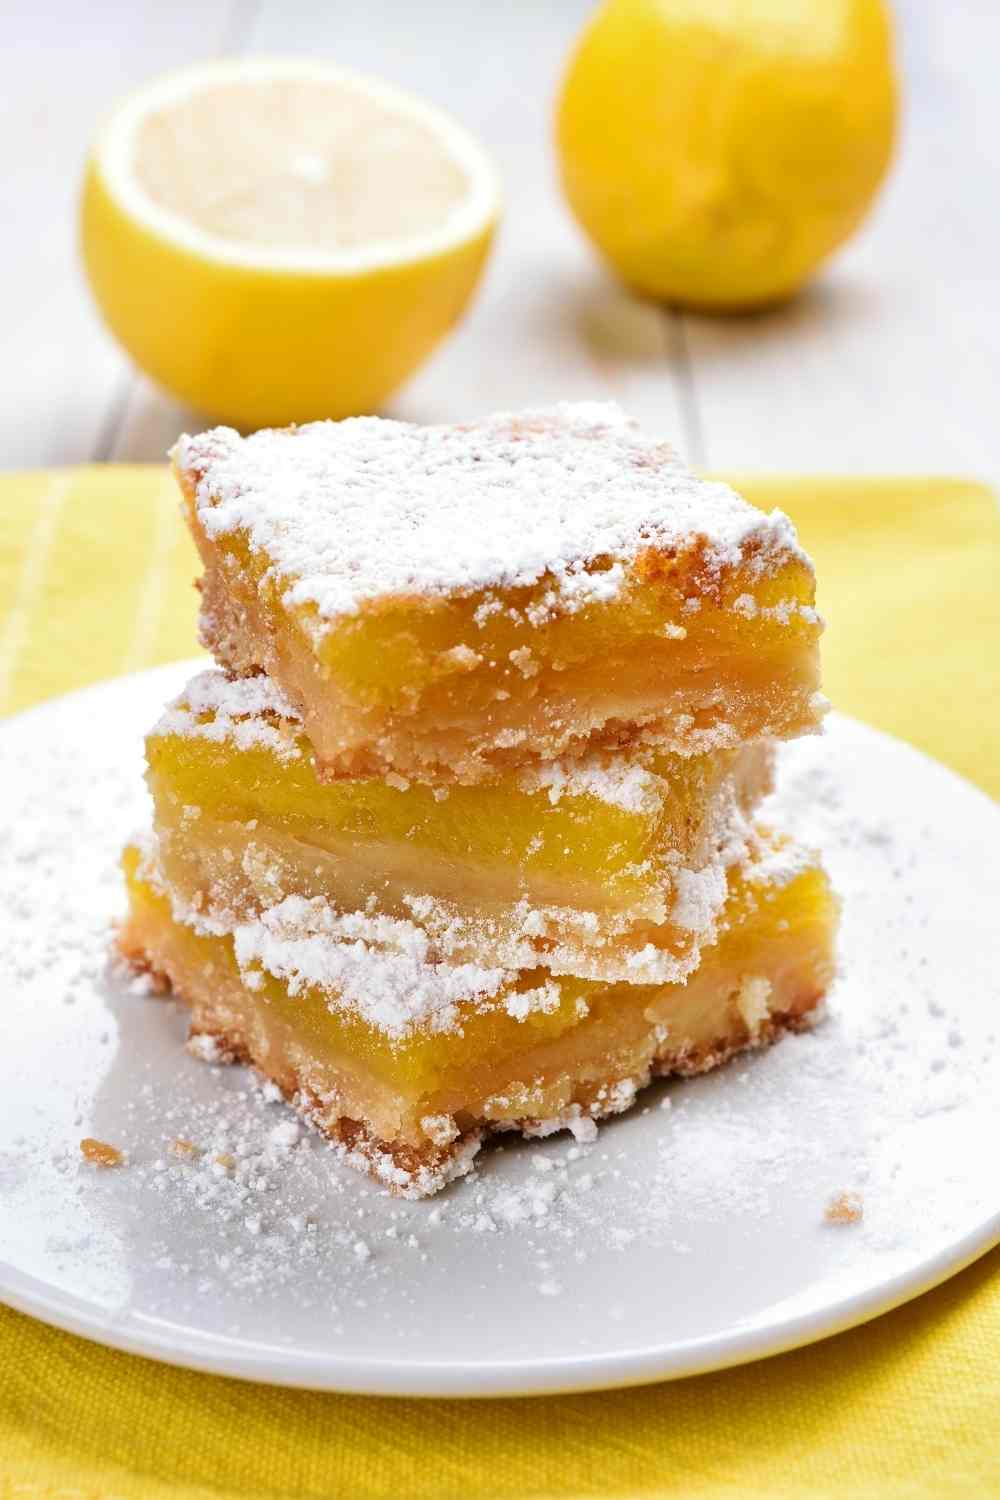 Orange and Lemon Pie - Delightful Easter Pie Recipes to Celebrate Easter